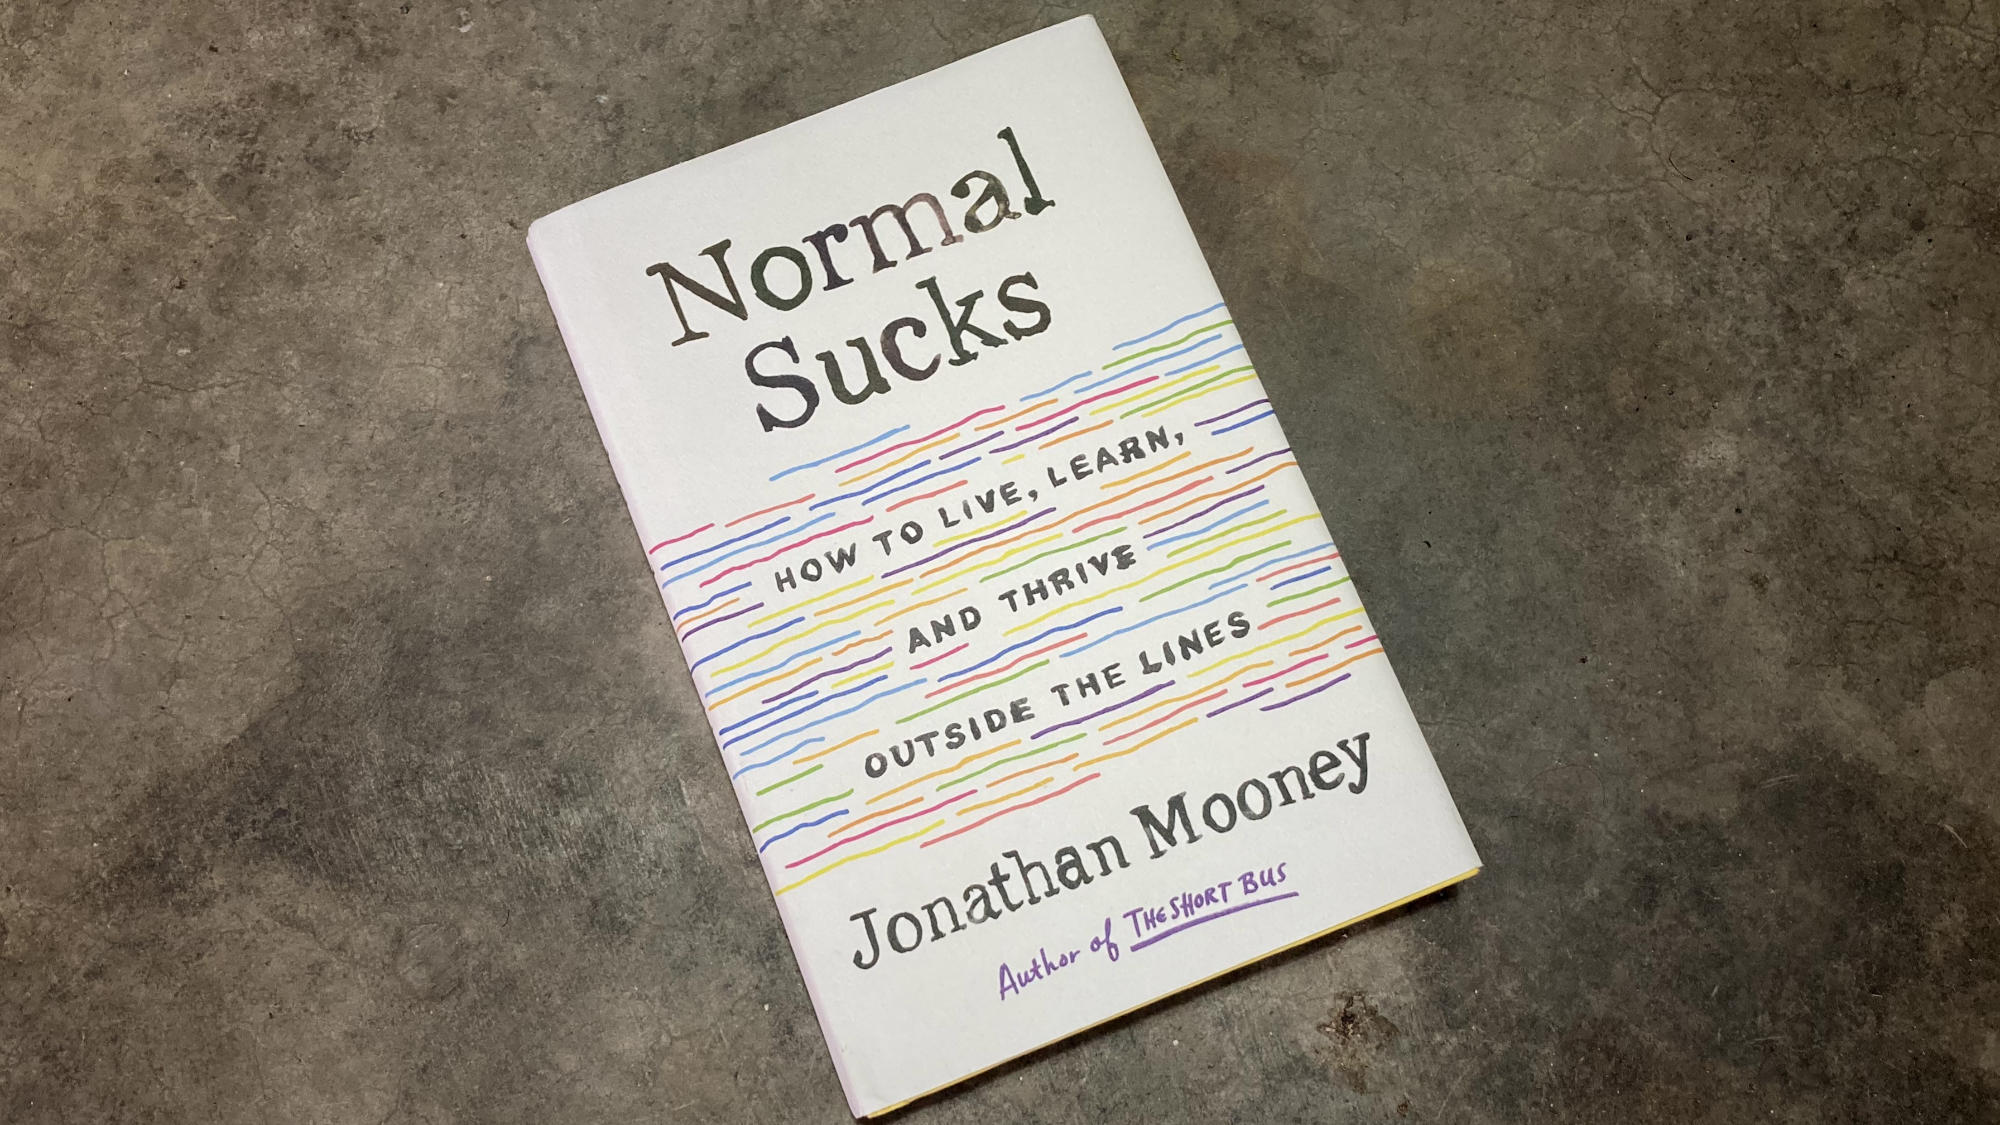 Normal Sucks by Jonathan Mooney